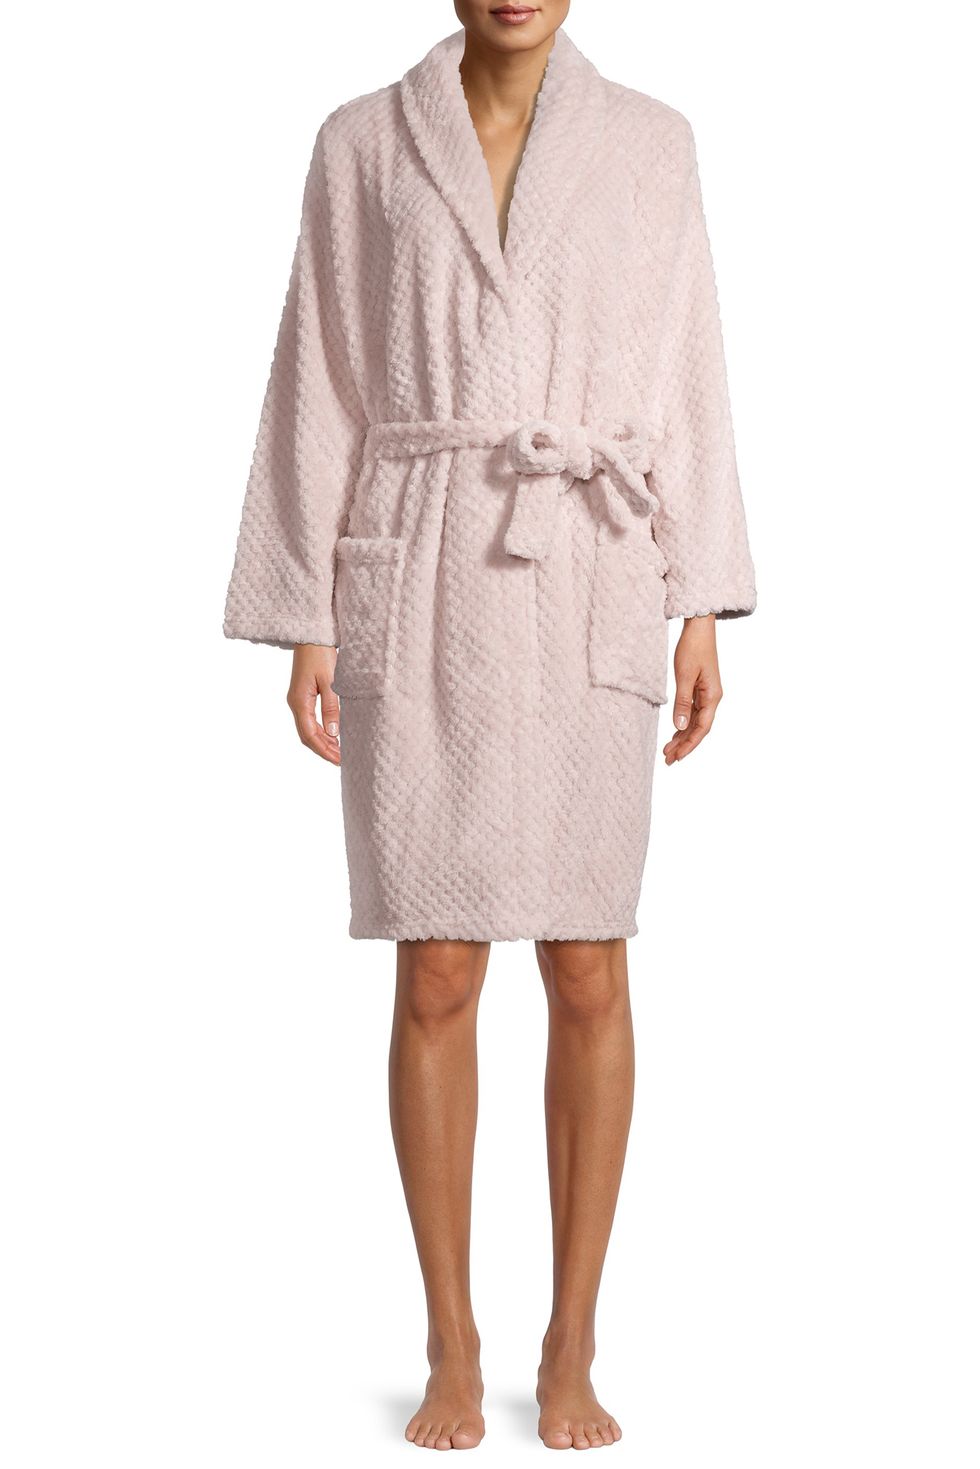  Women's Plush Robe